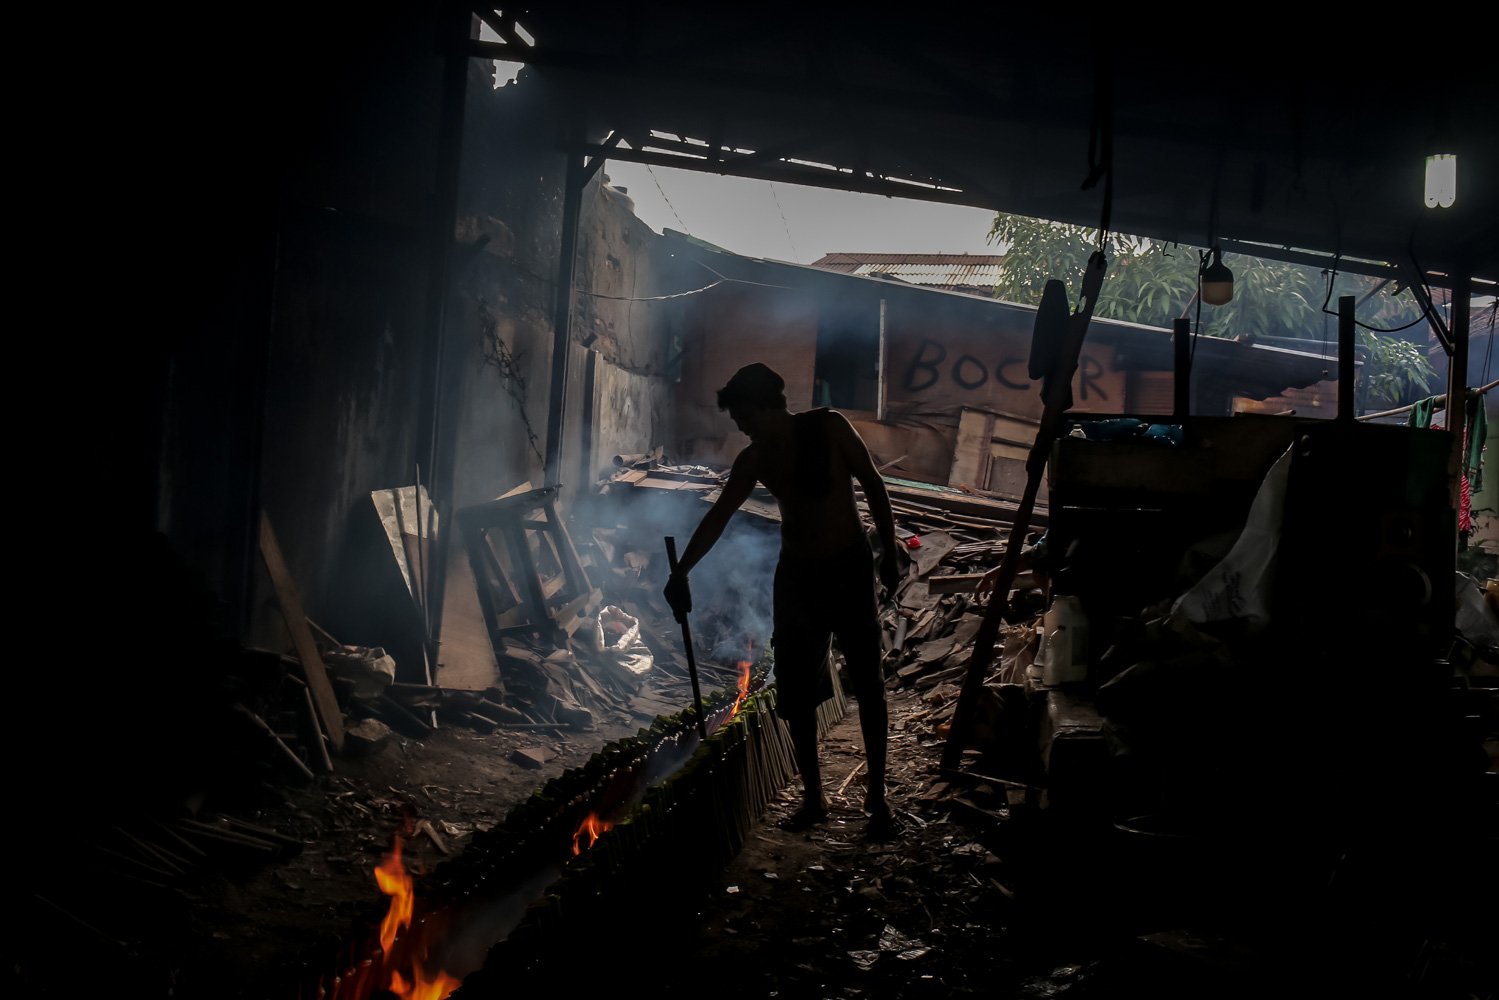 Pekerja menyelesaikan proses pembakaran lemang tapai di kawasan Senen, Jakarta, Selasa (28/3). Selama bulan Ramadhan, pelaku usaha lemang tapai meningkatkan produksi hingga 300 buah per hari dengan harga jual sebesar Rp17 ribu per batang.